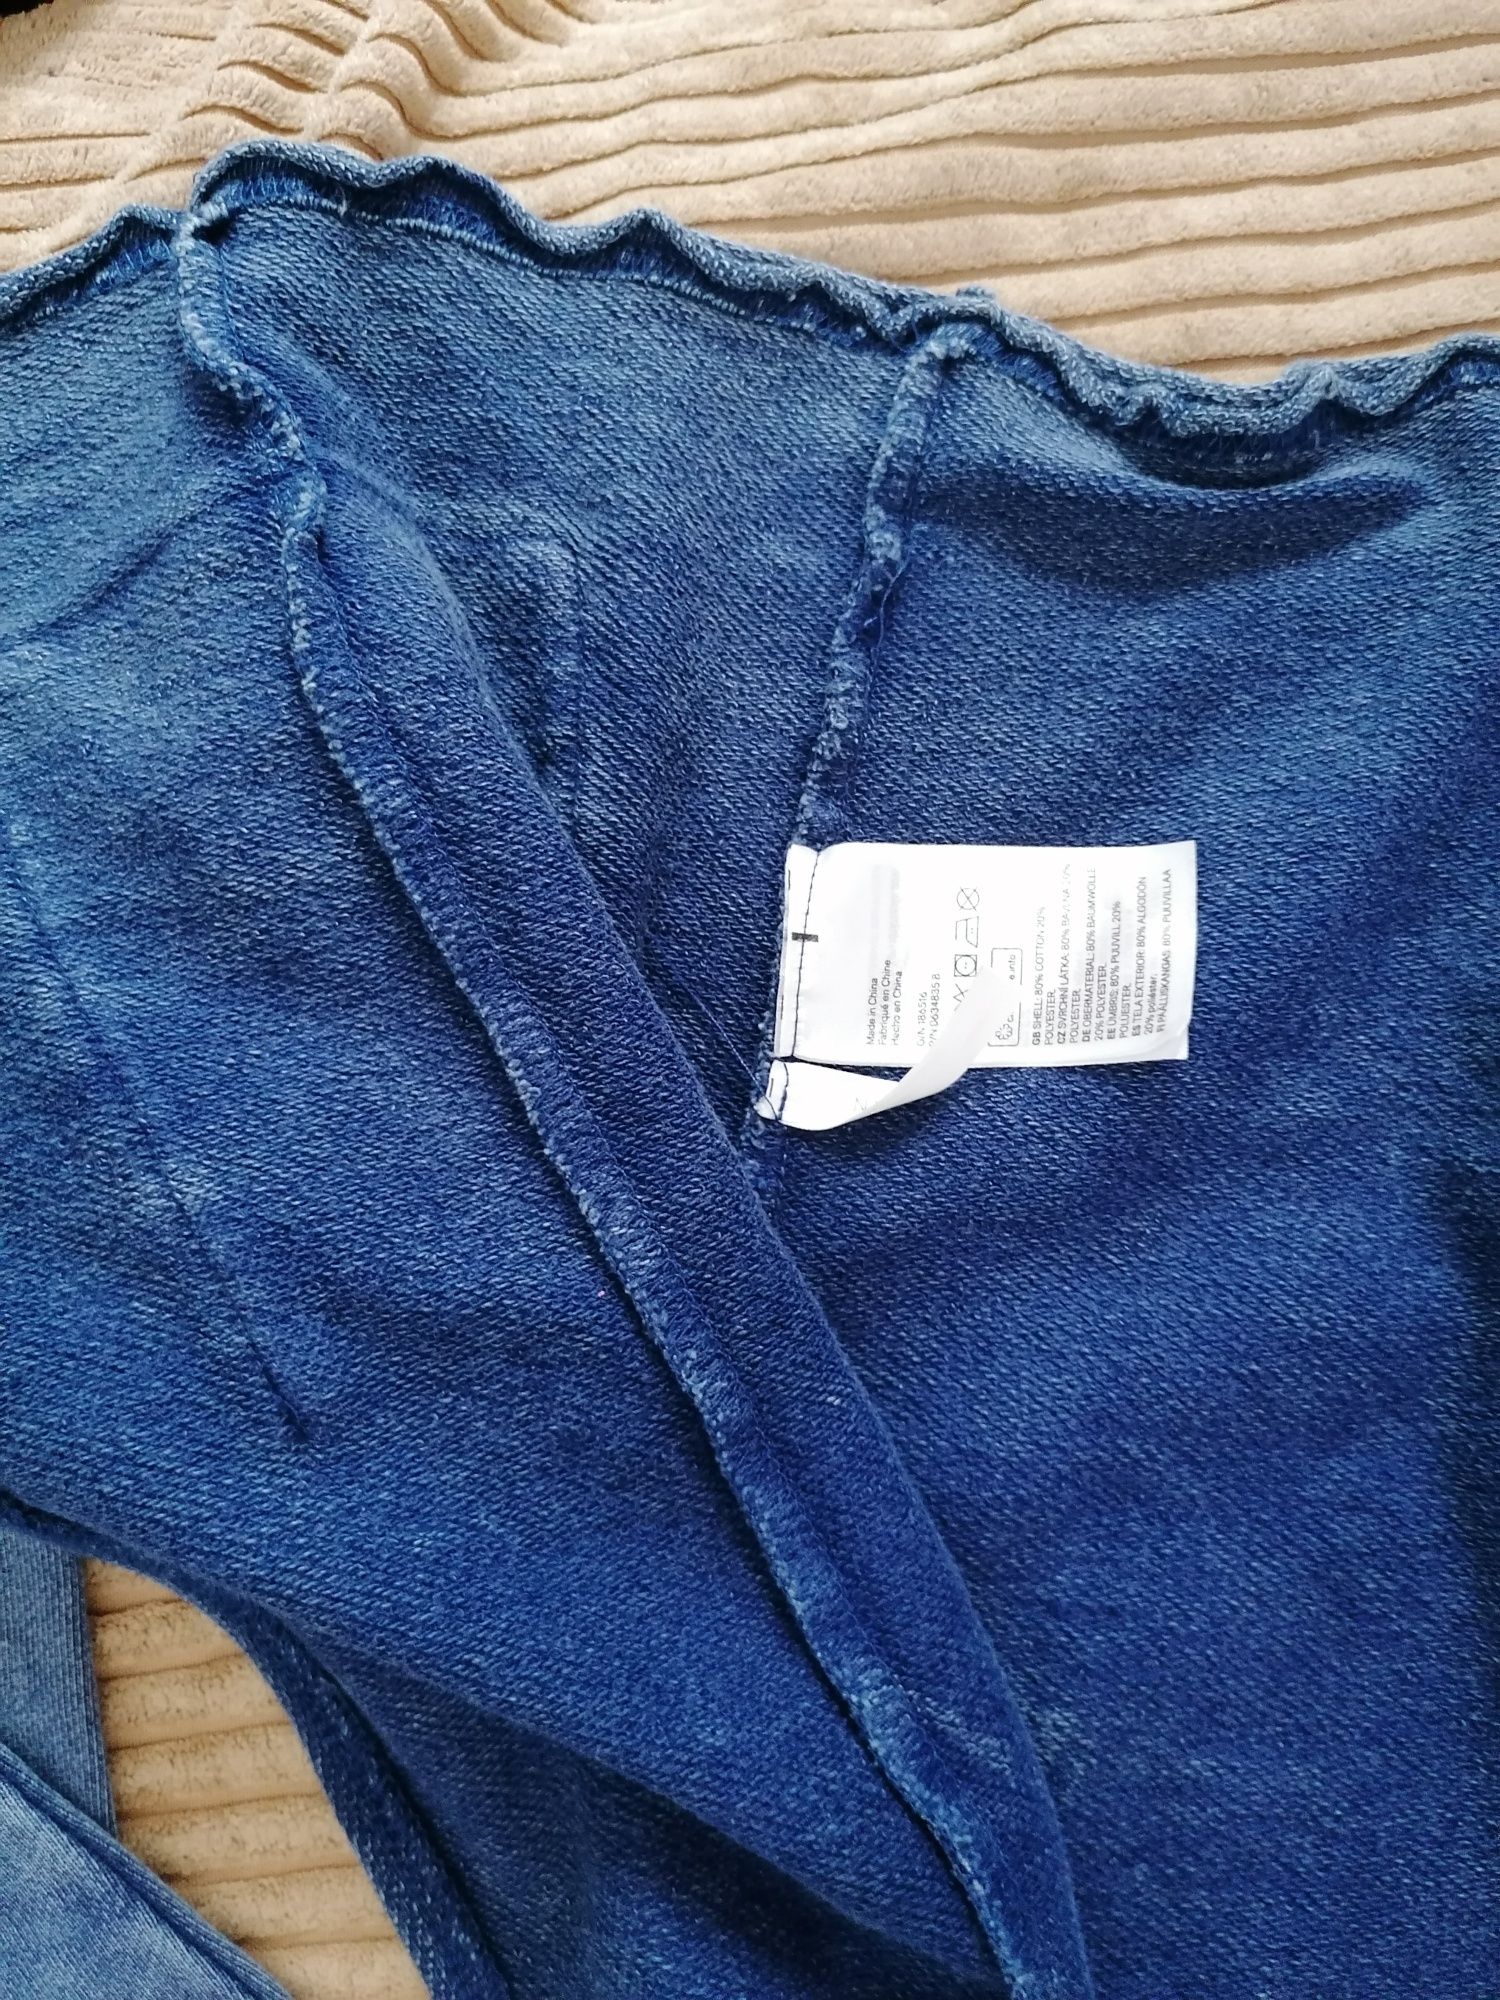 Hanorac, cardigan, bluza H&M copii, băieți mar. 6-8ani,128 cm